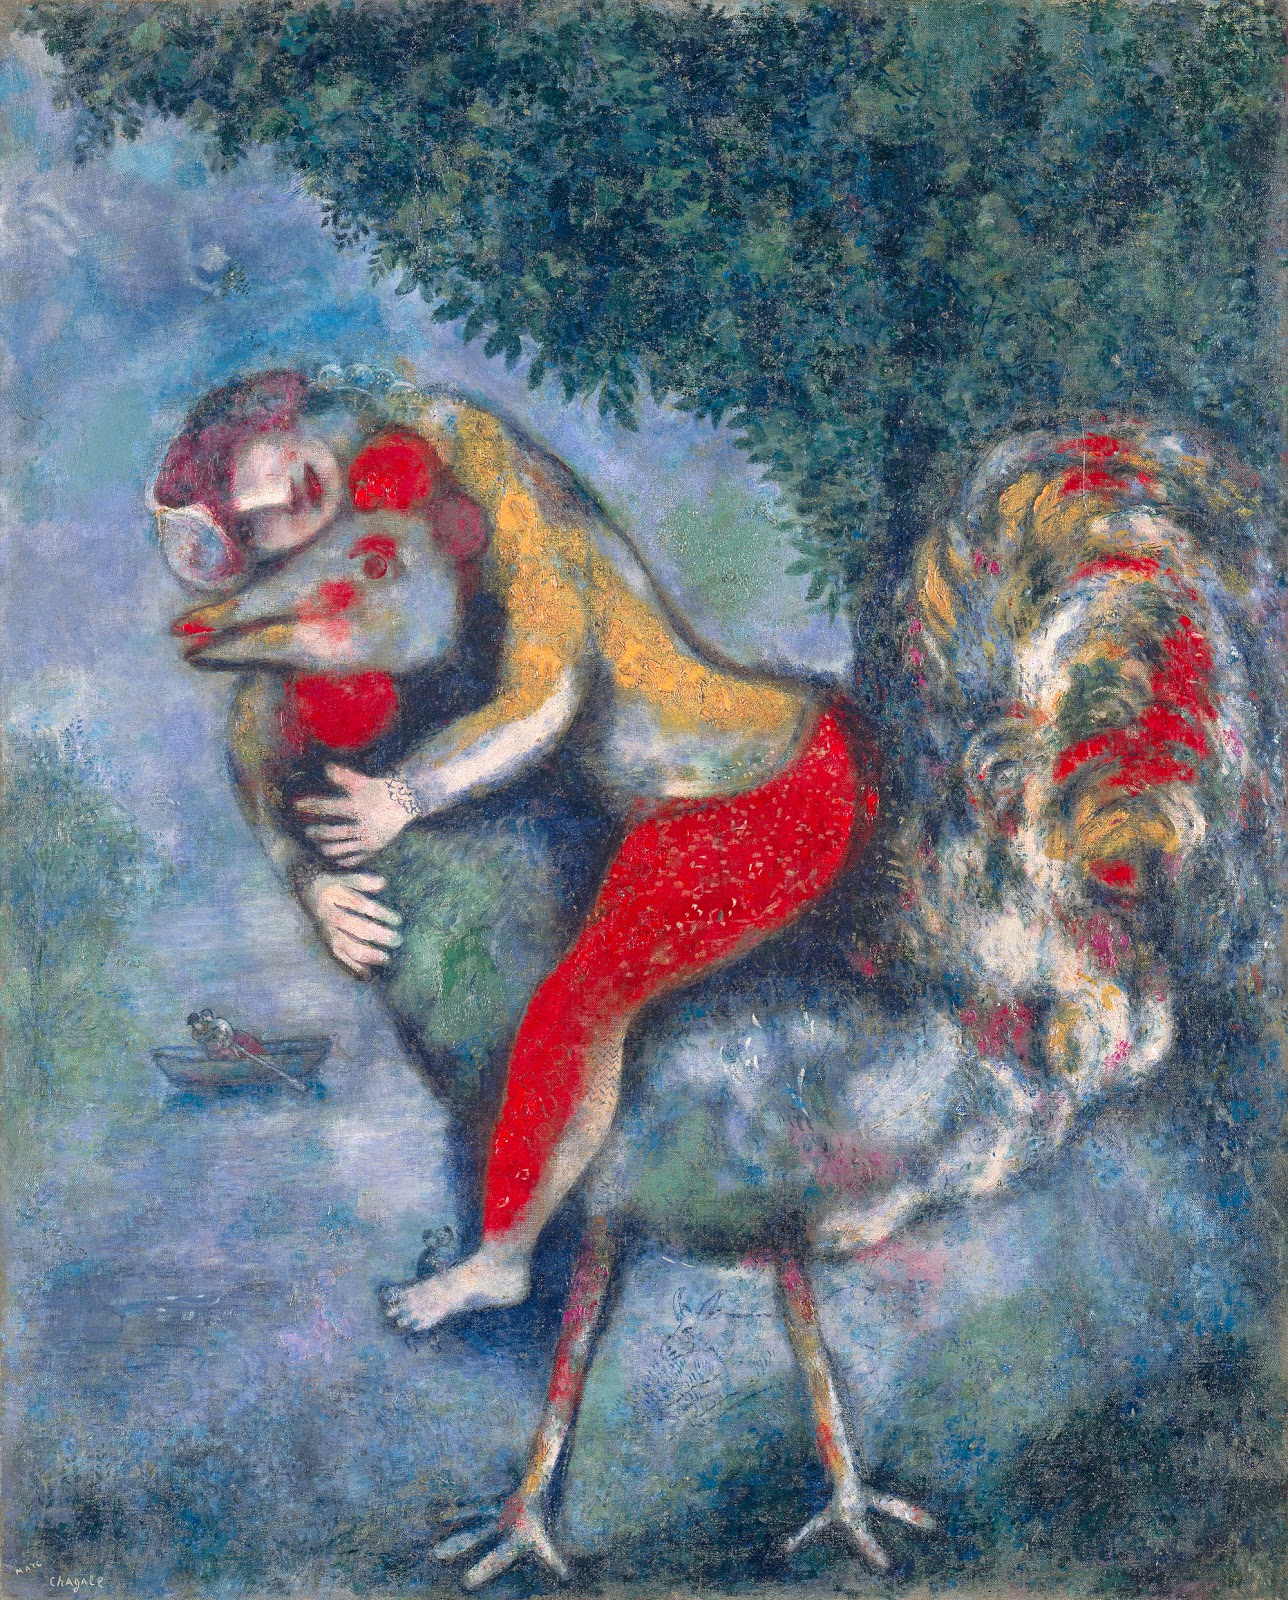 Marc+Chagall-1887-1985 (299).jpg